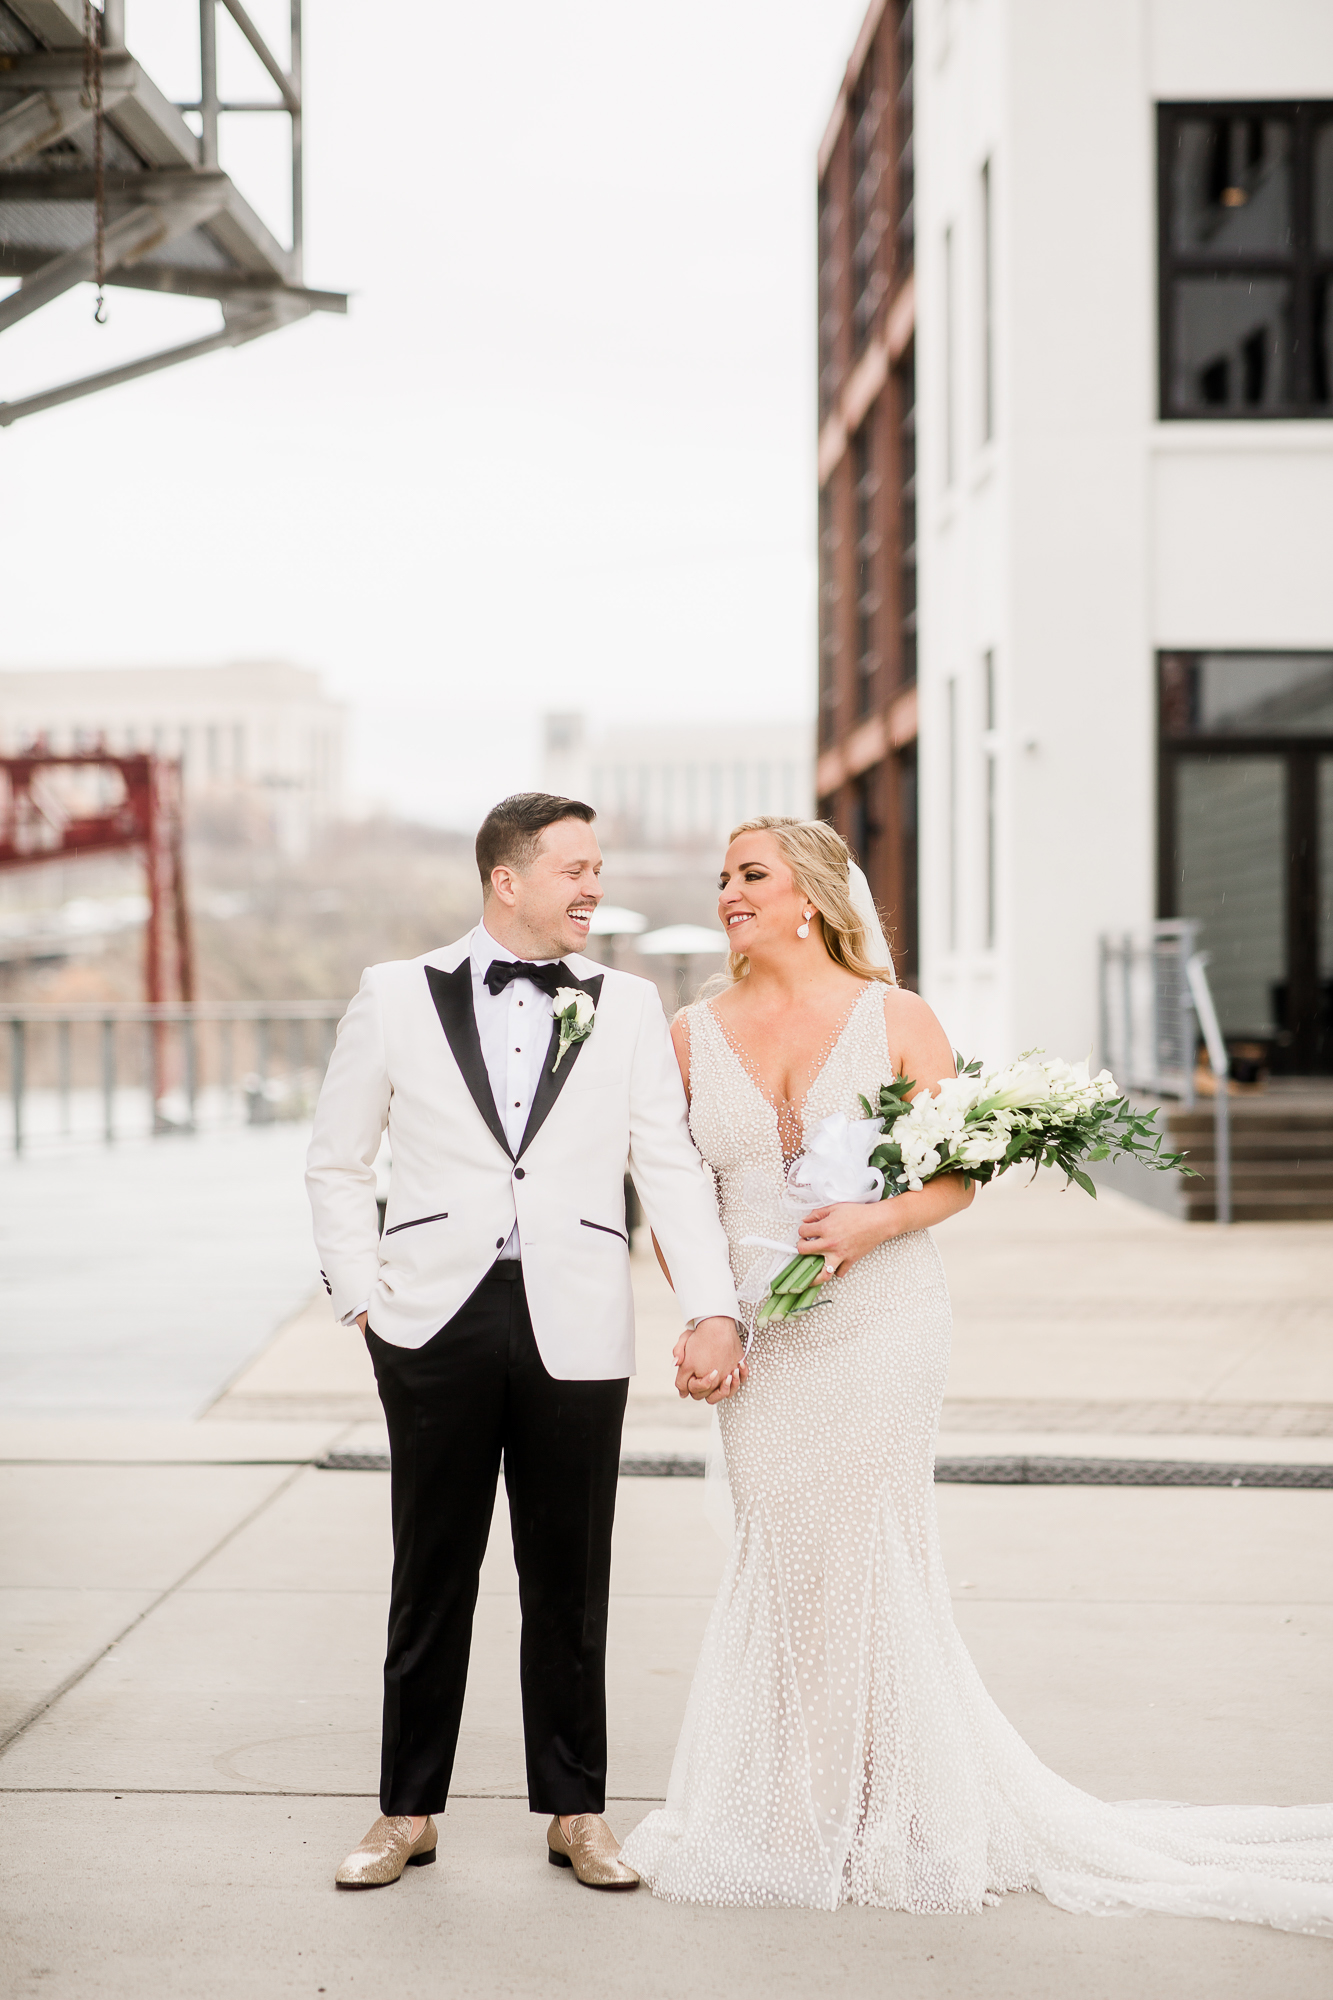 Amanda May Photos Nashville Wedding Photography | Nashville Bride Guide